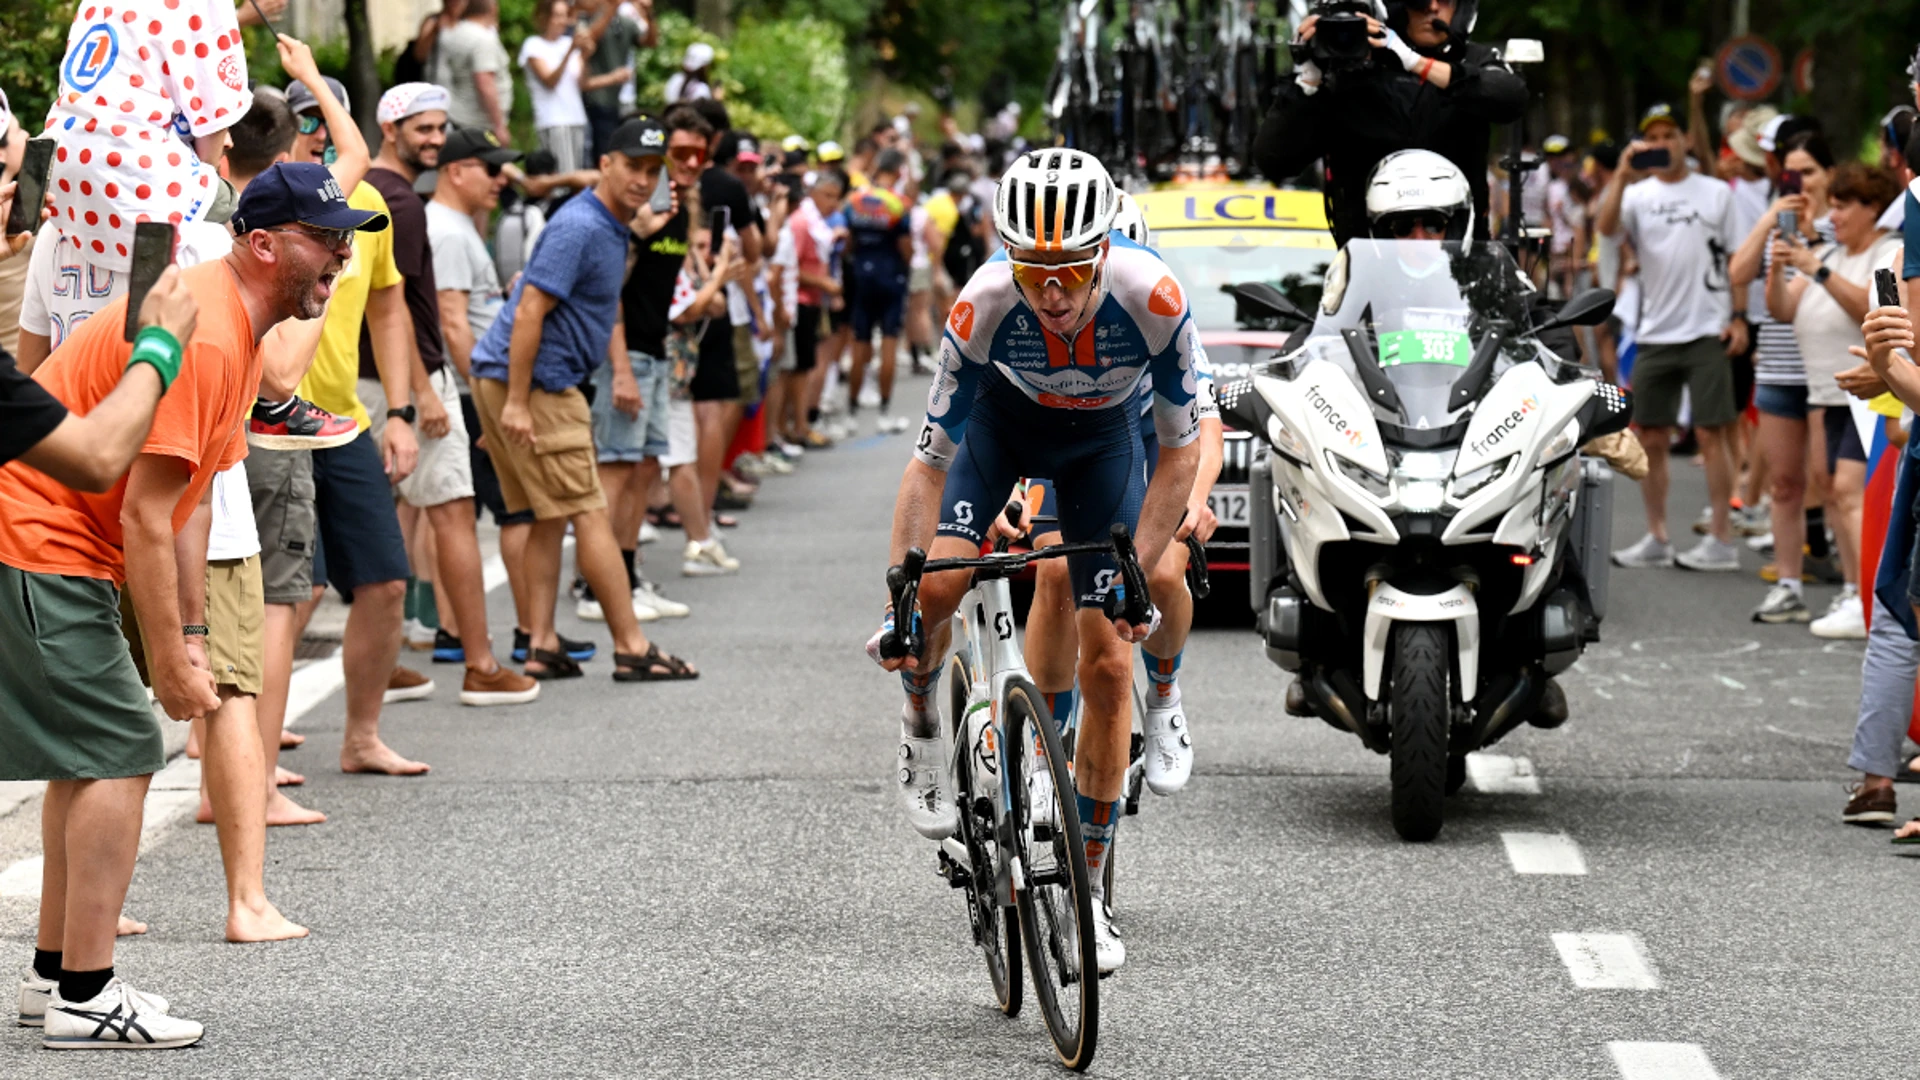 France's Bardet wins Tour de France opening stage